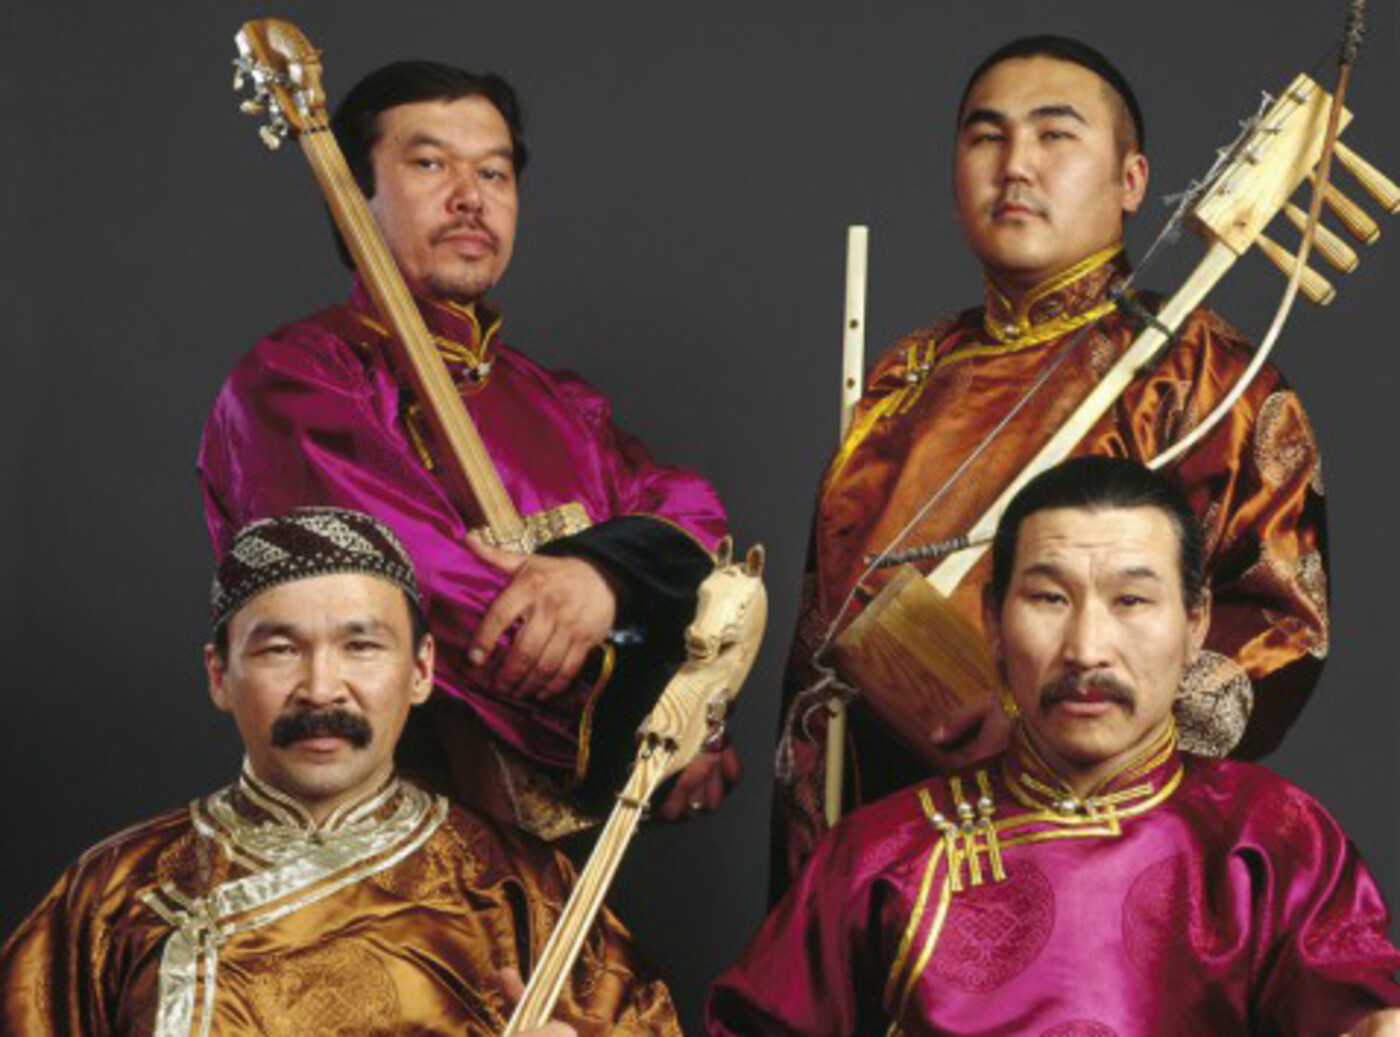 Huun-Huur-Tu & Kronos Quartet - keelzang en strijkers